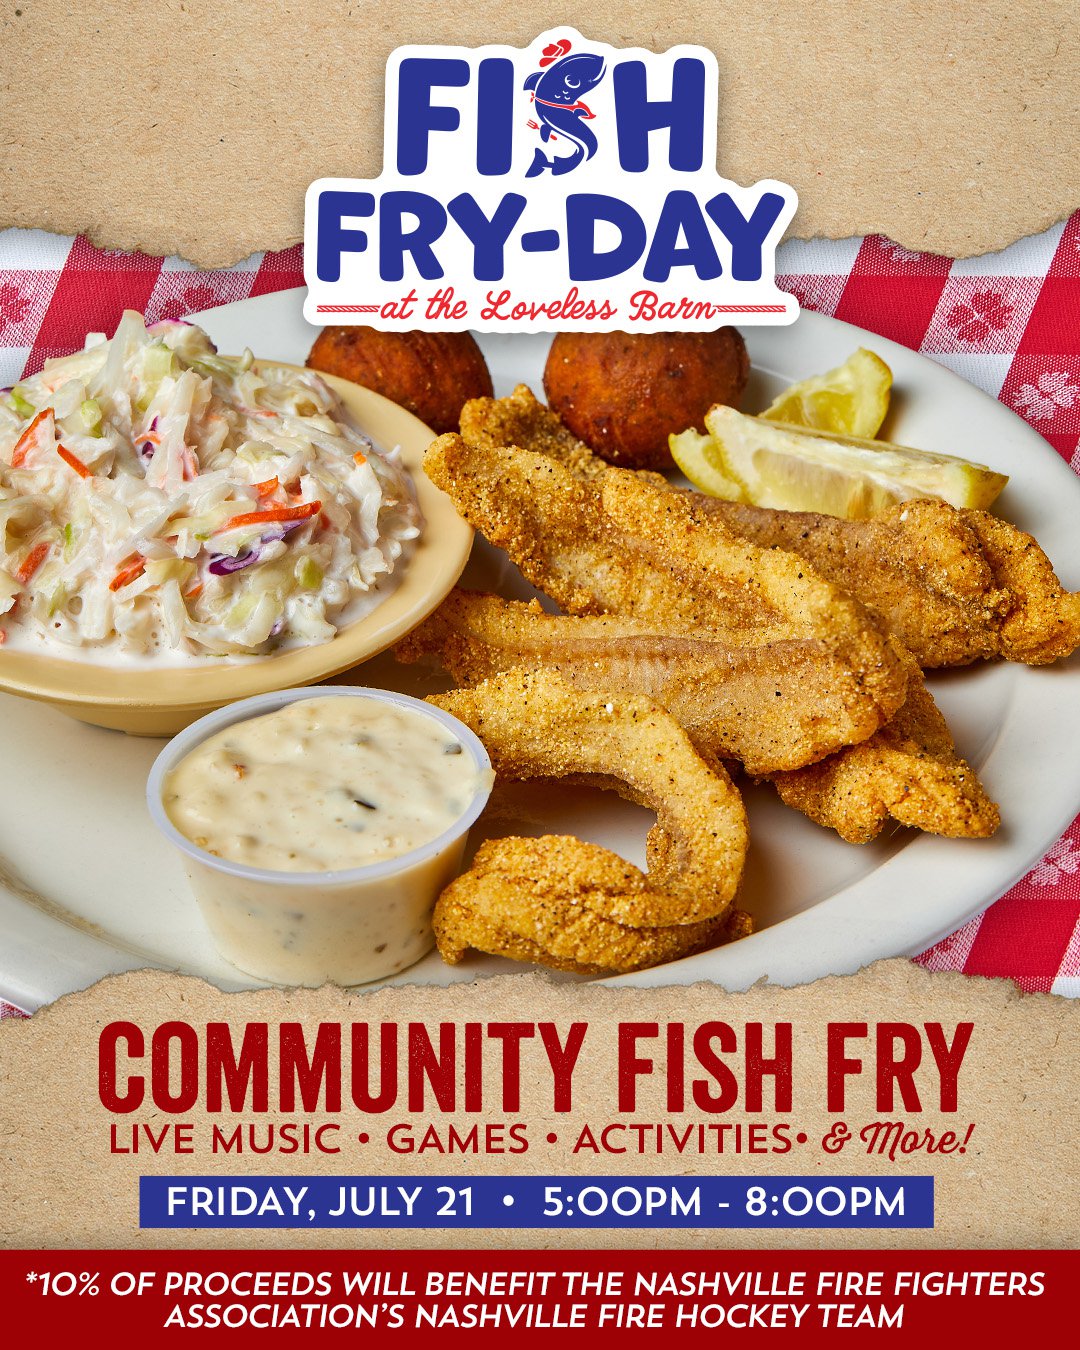 Fish Fry-day at the Loveless Barn - Nashville Lifestyles